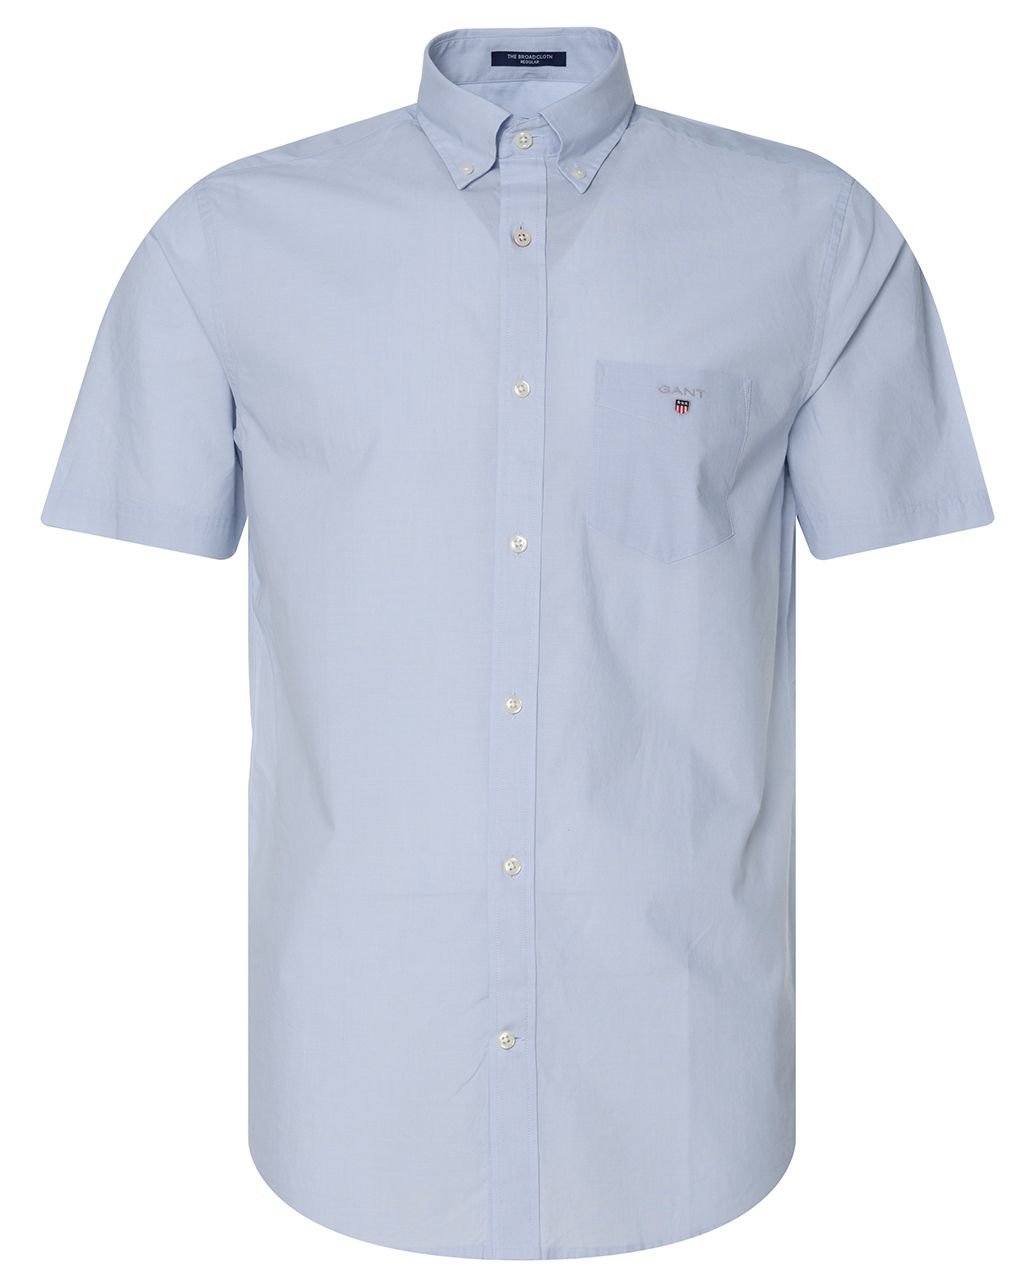 GANT Casual Overhemd KM Blauw 066467-001-L